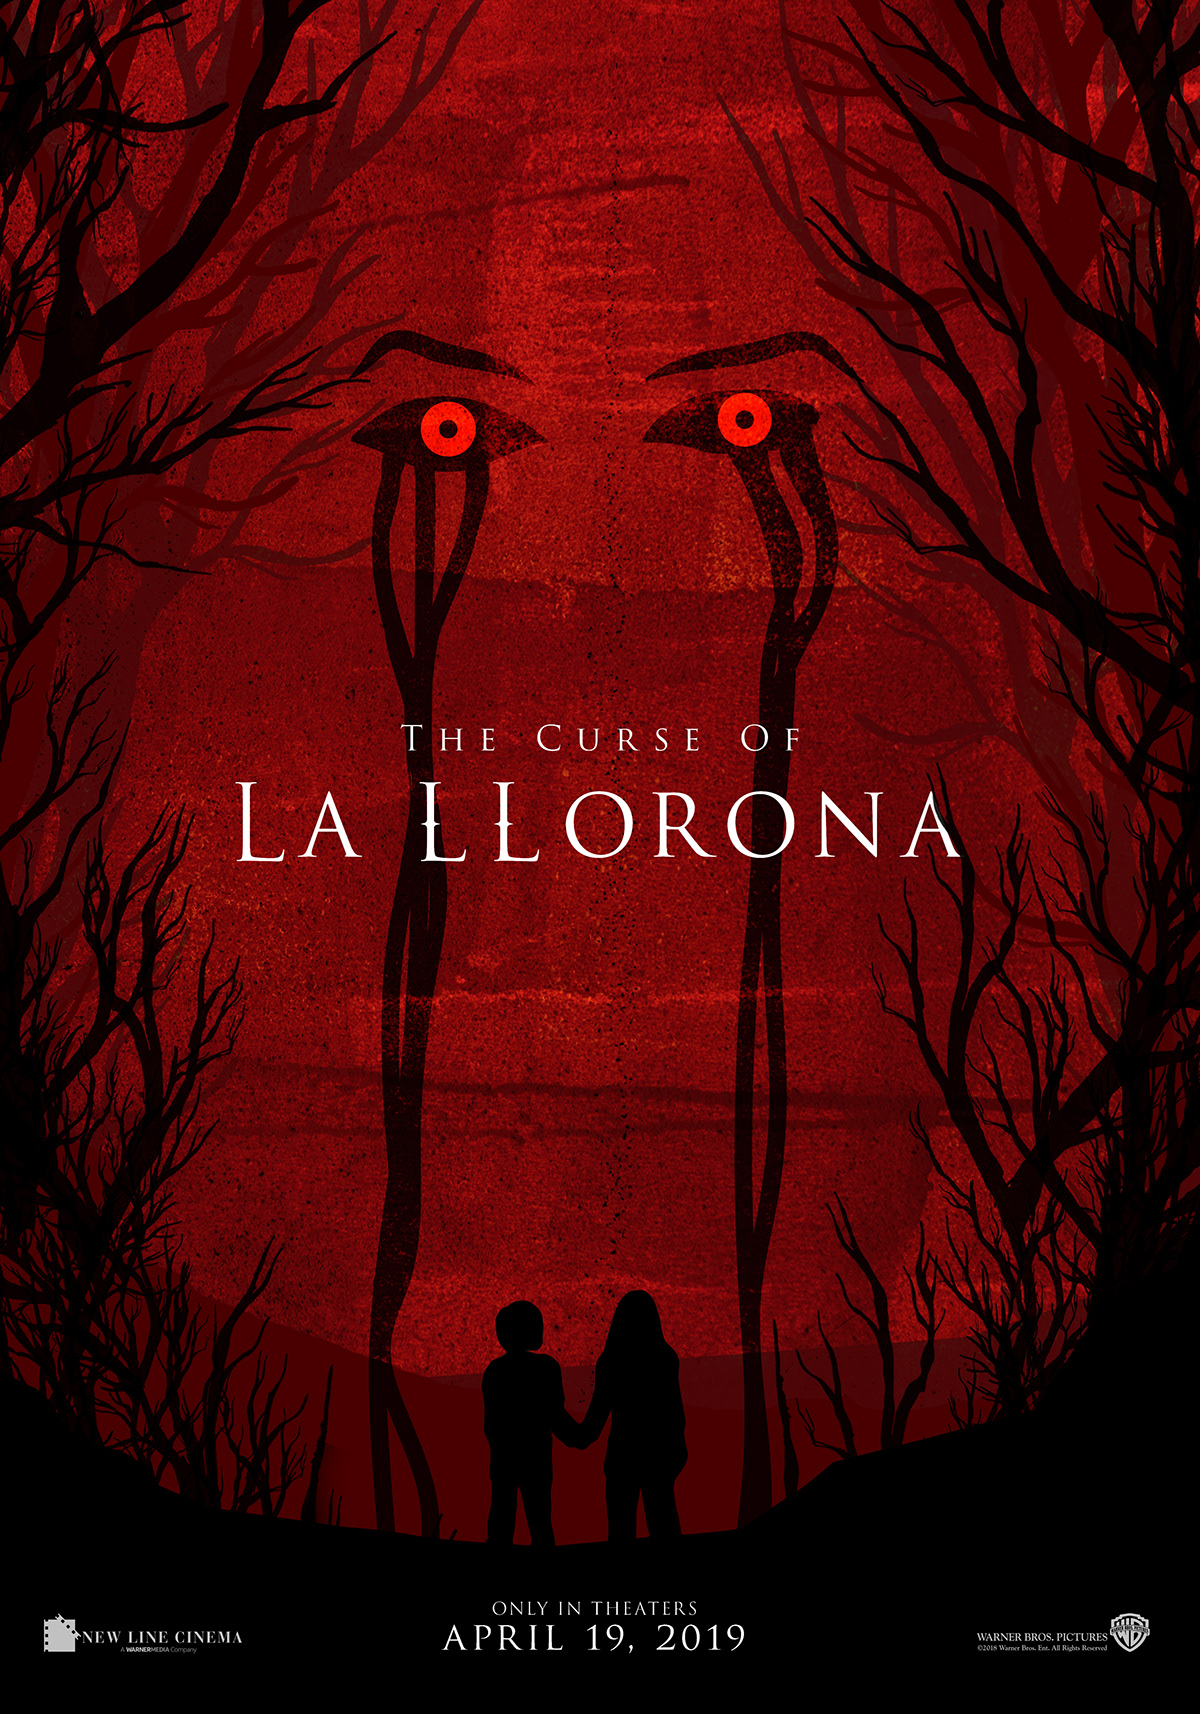 La Llorona pelicula arte dibujo artwork poster diseño ilustracion darkart artwok